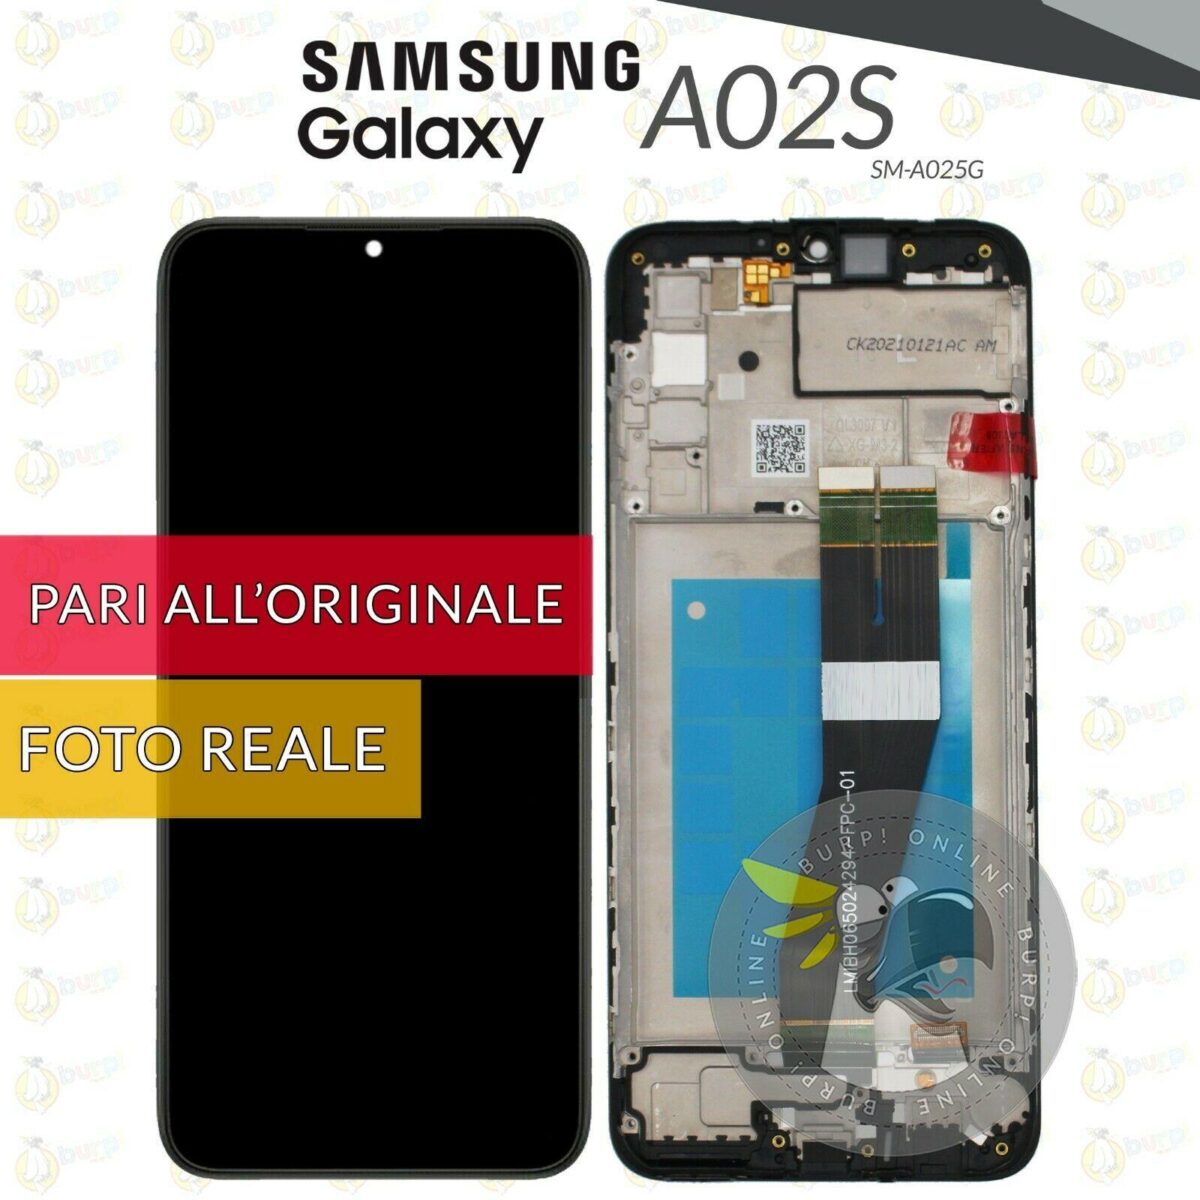 DISPLAY PARI ORIGINALE SAMSUNG A02S SM A025G FRAME LCD TOUCH SCHERMO VETRO 234374398694